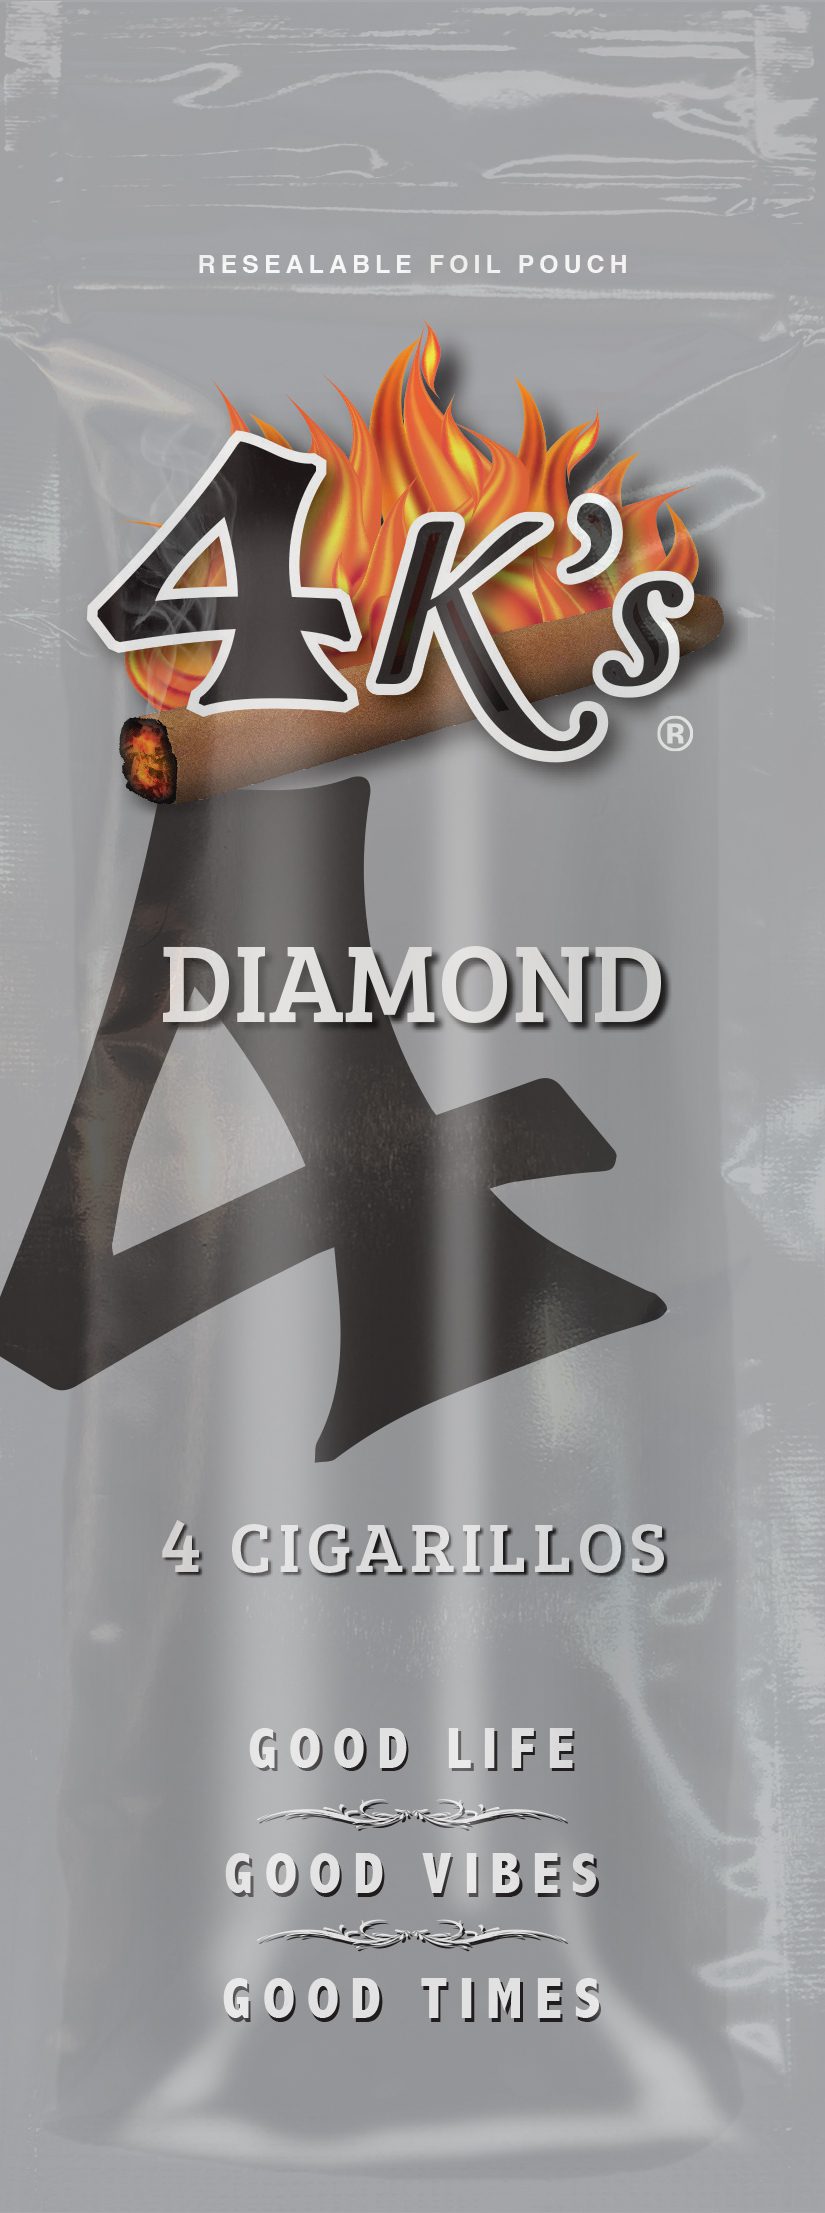 4Ks_Diamond_Web